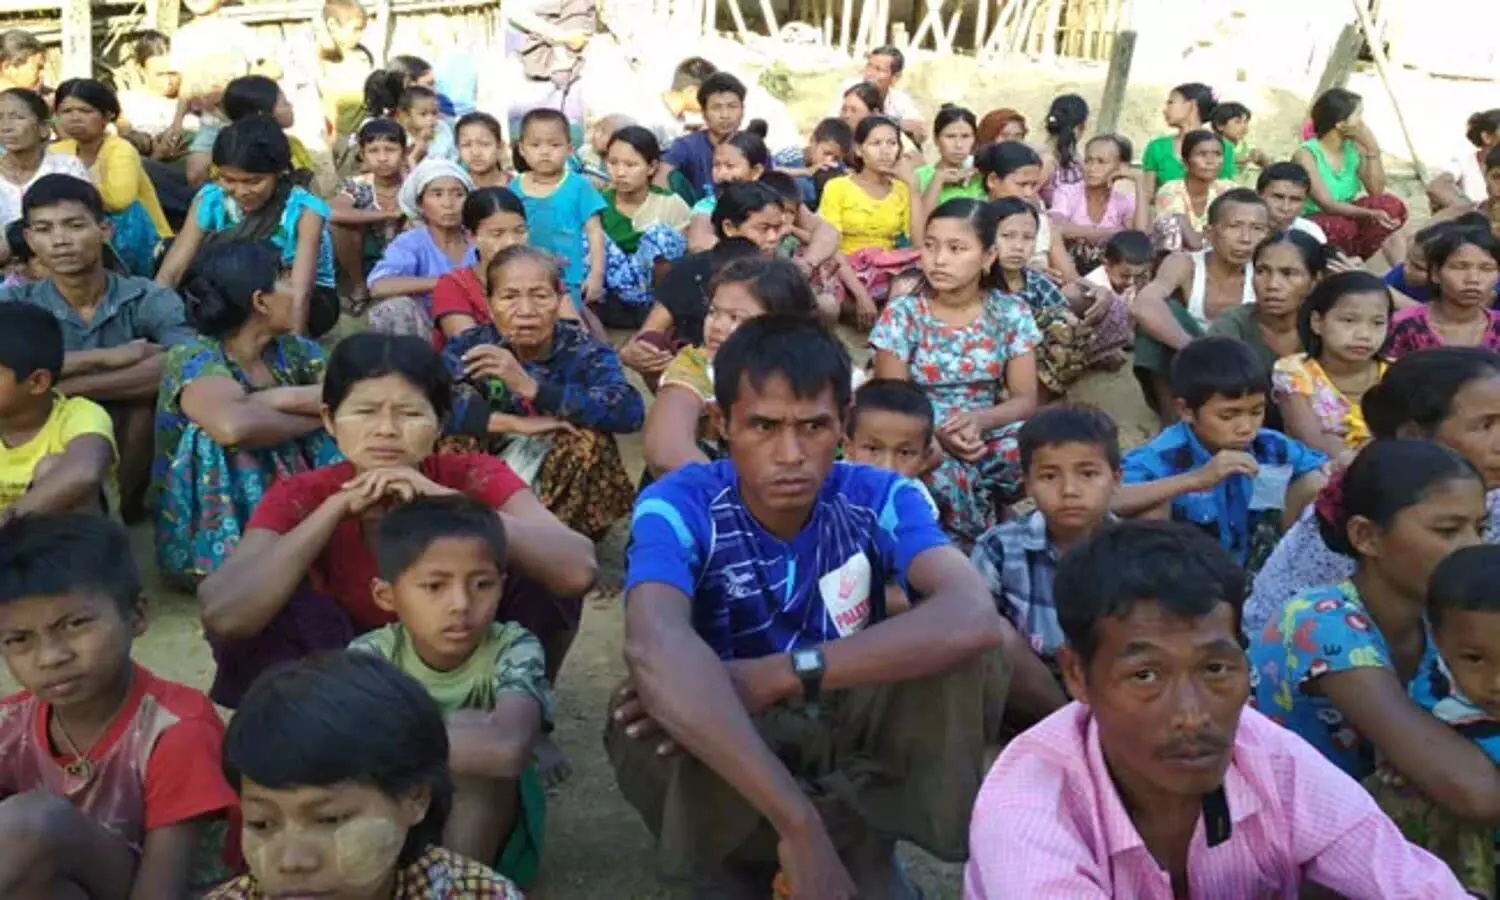 Many refugees fleeing Bangladesh came to Mizoram